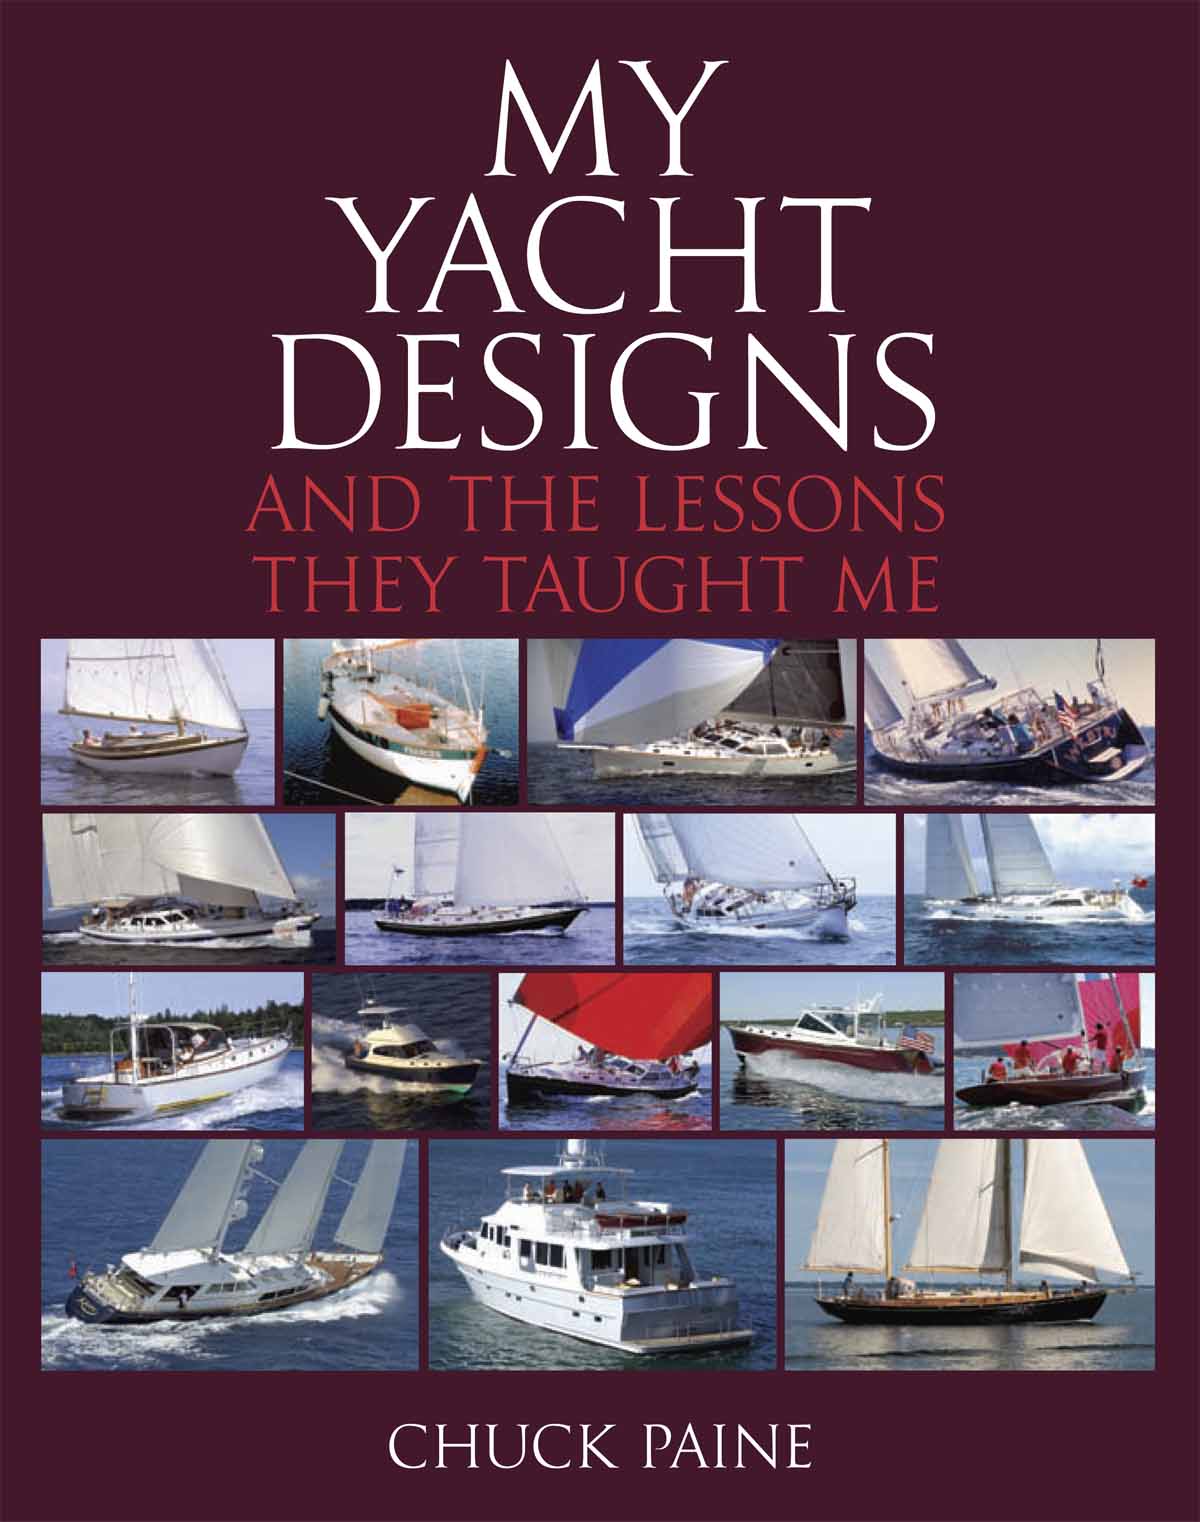 One secret: Boat design books Diy